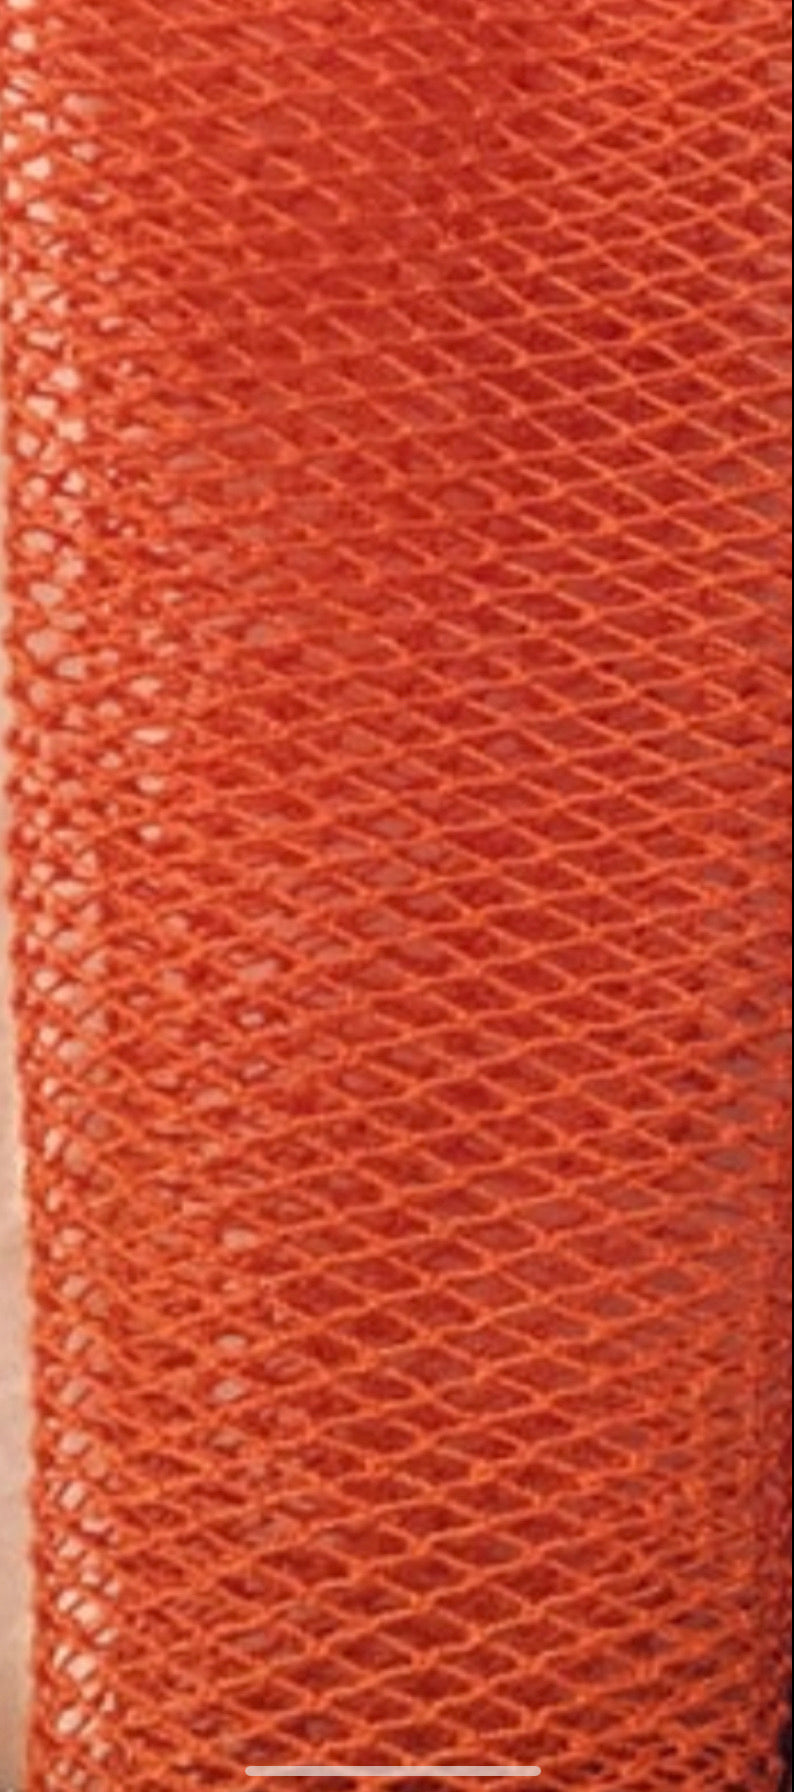 Sponge / African Exfoliating Net - Soft (Orange)